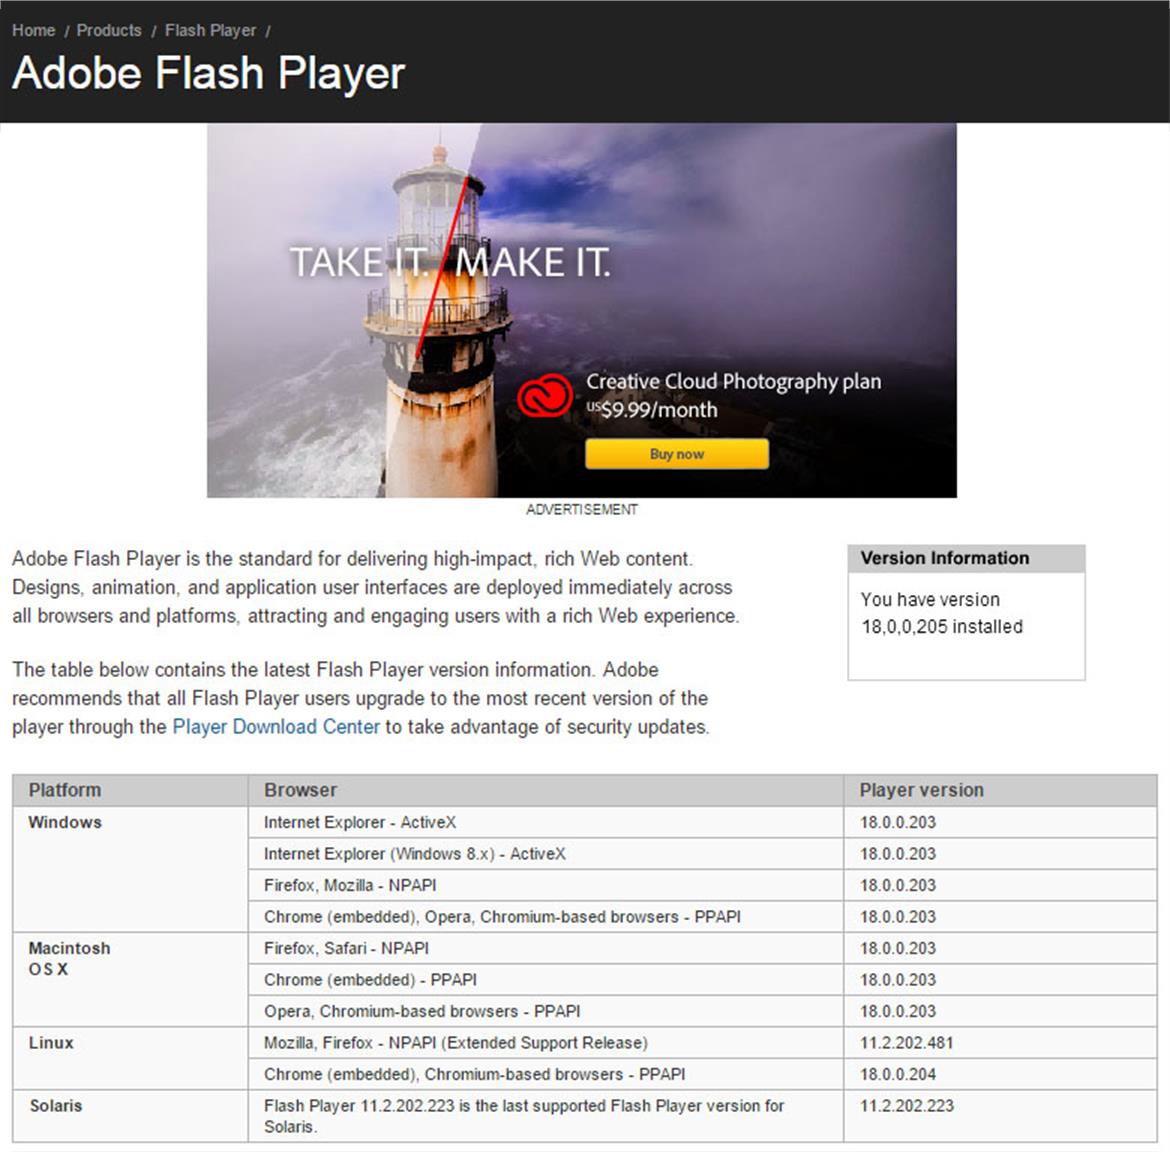 Hacking Team Hack Unearths Two More Devastating Adobe Flash Exploits